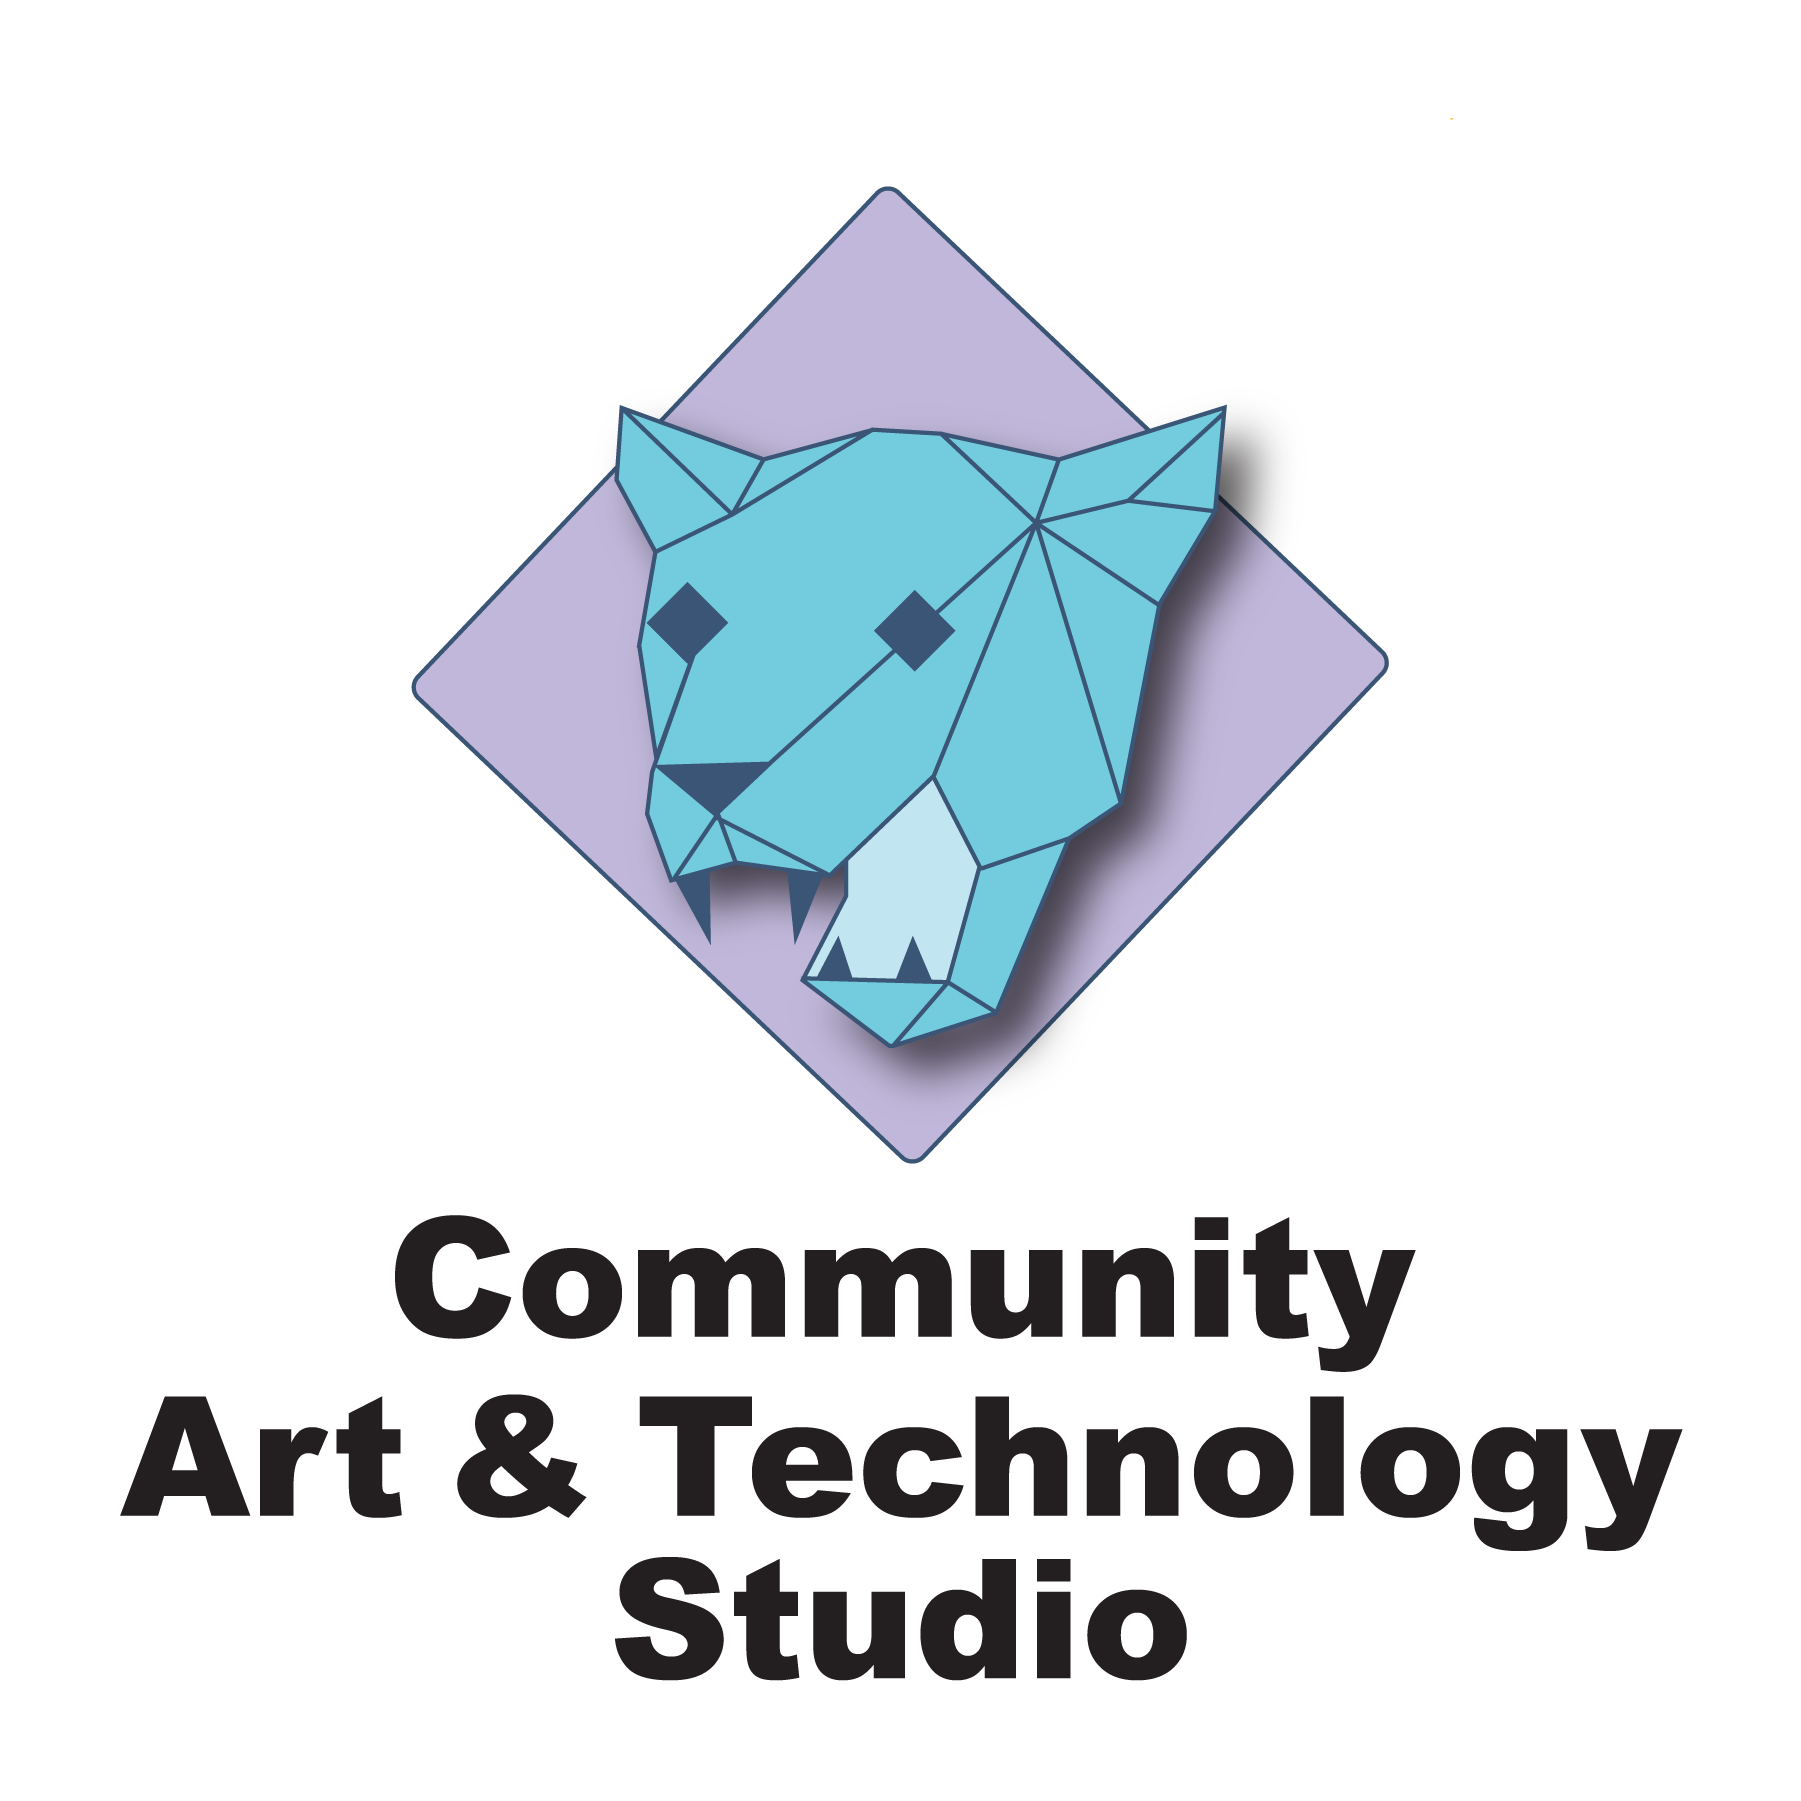 Community Art & Technology Studio